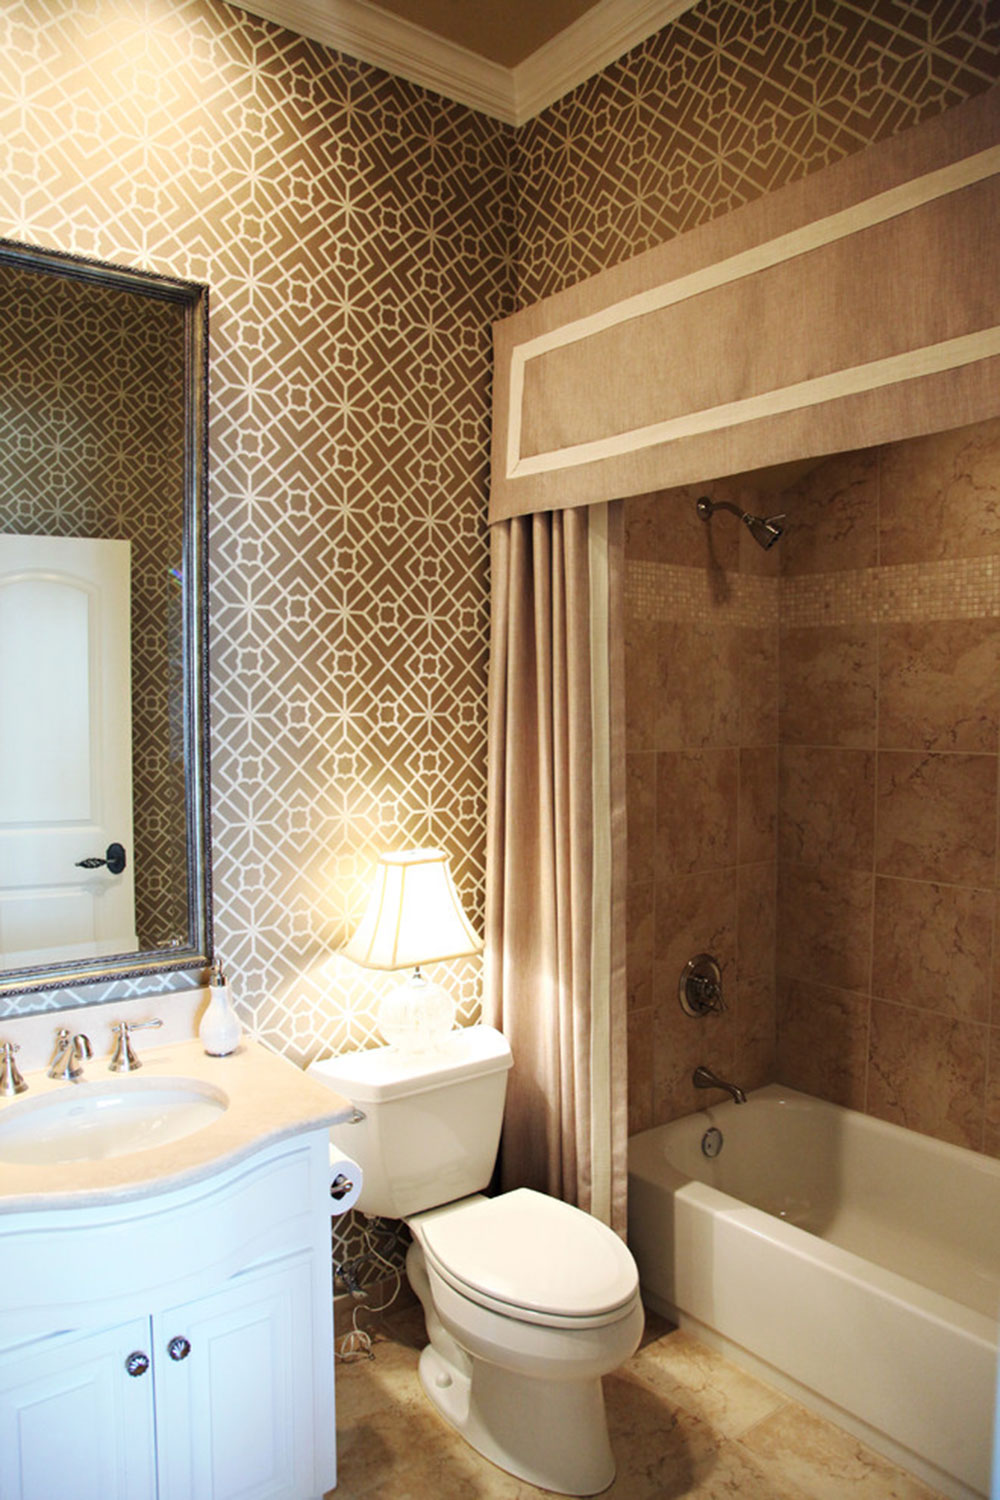 Enhance Your Bathroom Appearance With Trendy Shower Curtains10 Trendy Shower Curtains For Your Bathroom